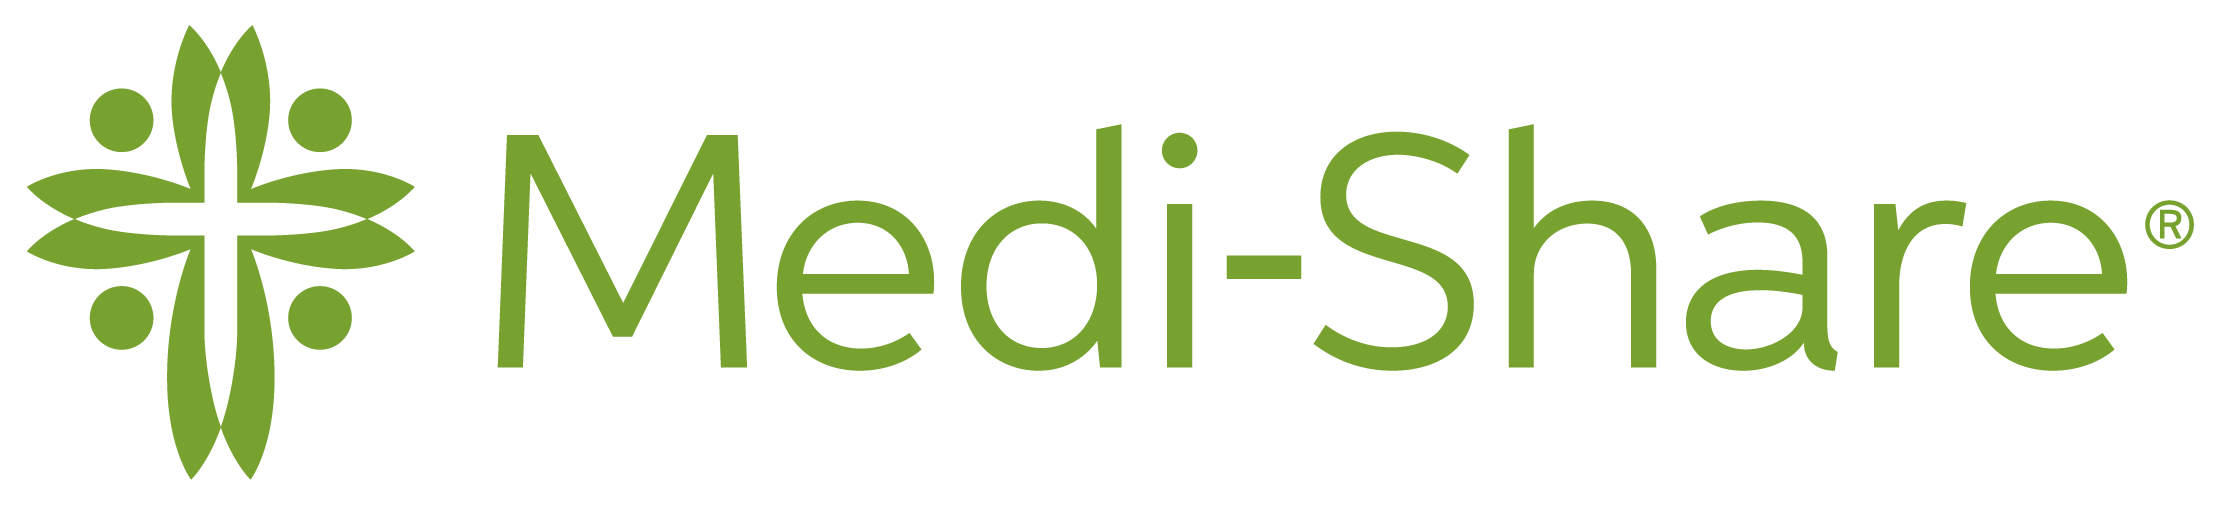 medishare-logo